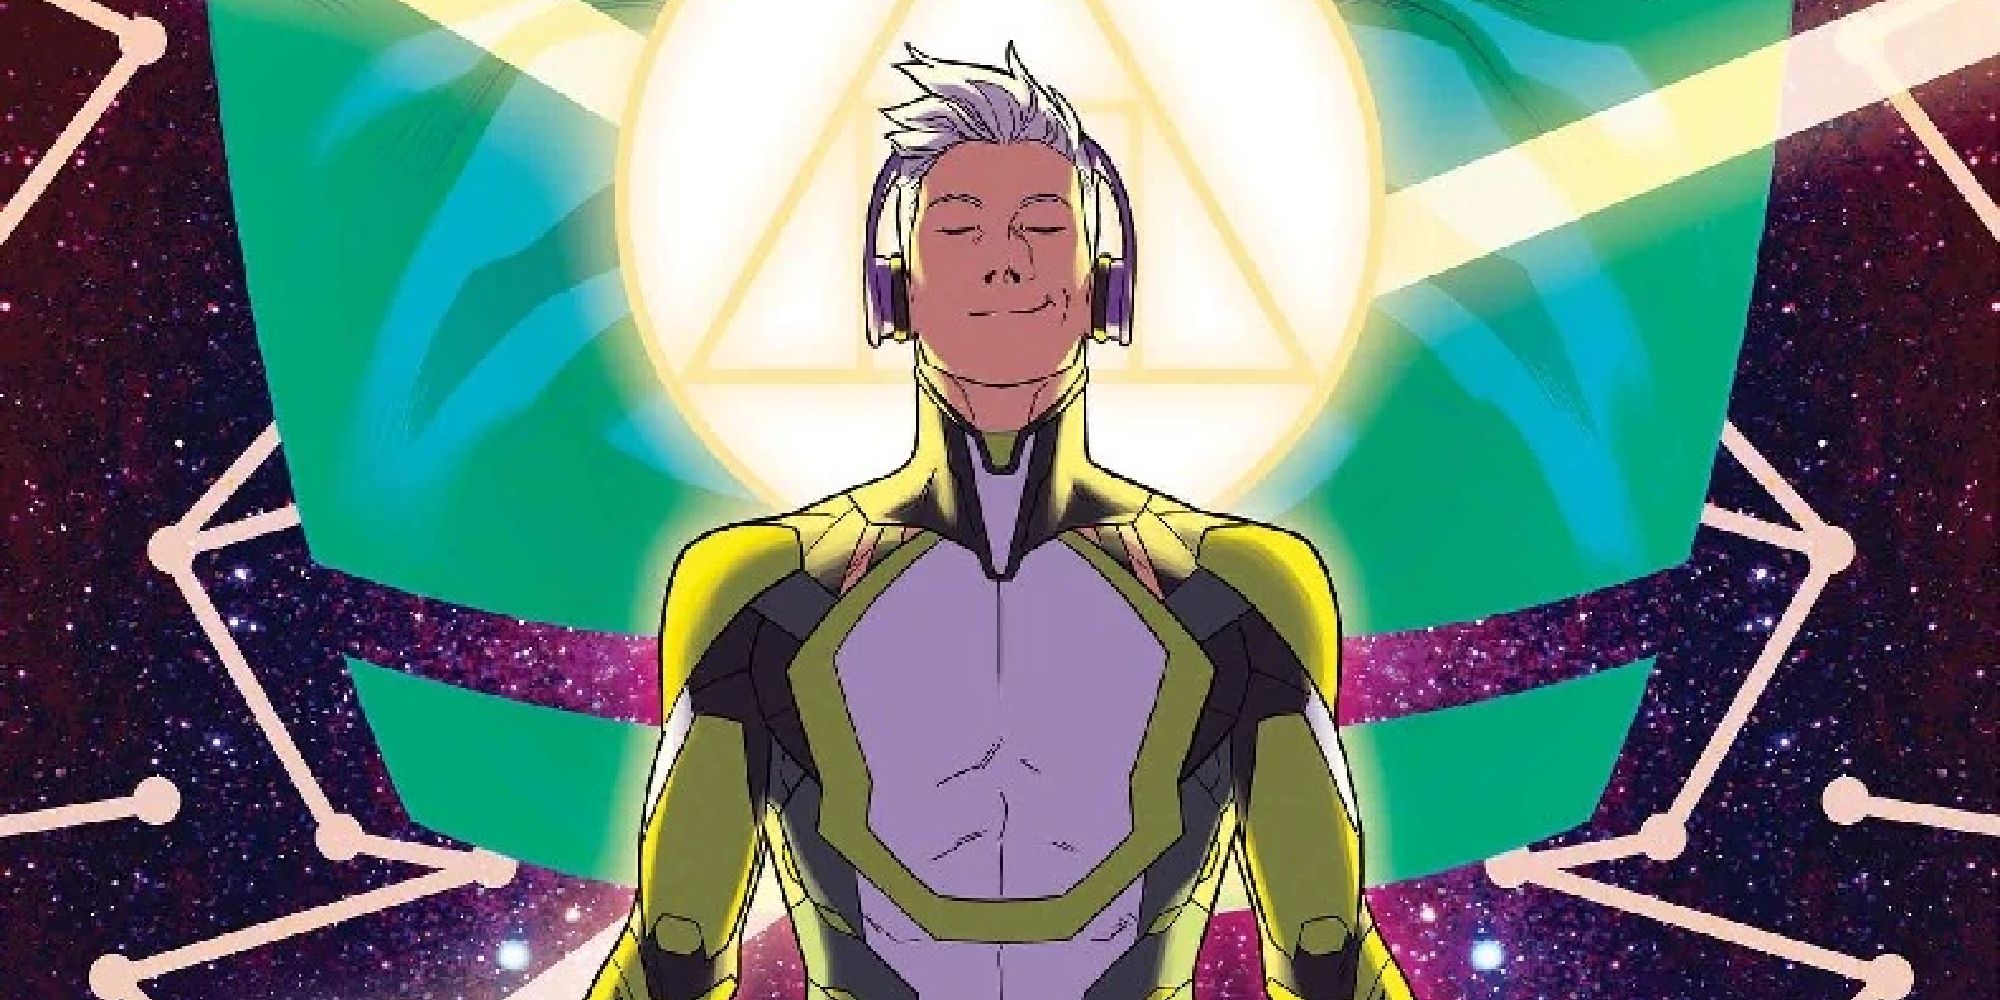 Noh-Varr wearing headphones as Marvel Boy in the comics